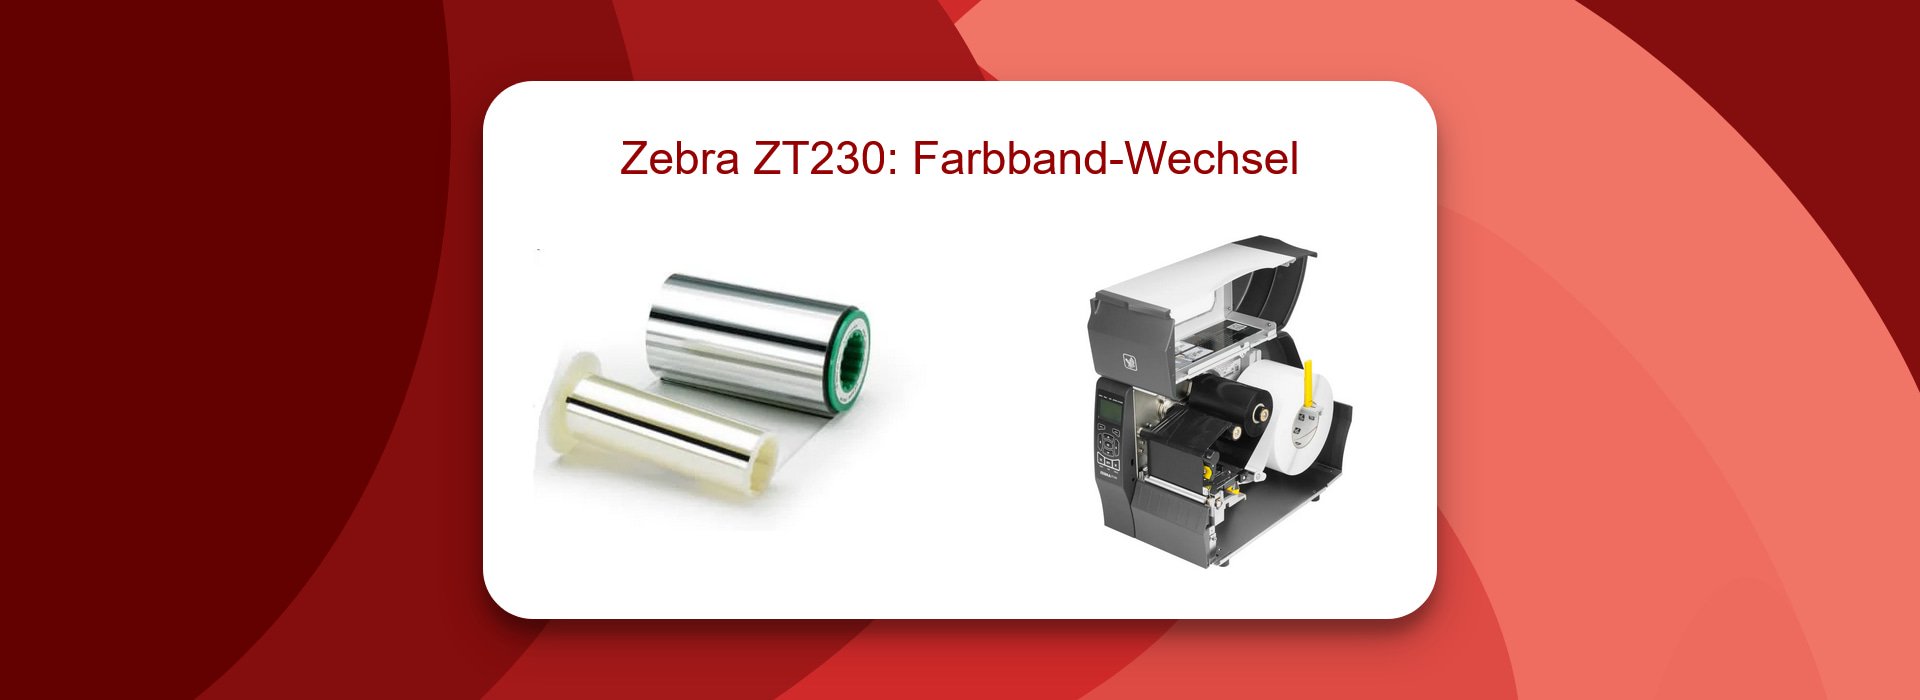 Zebra ZT230: Farbband-Wechsel Anleitung